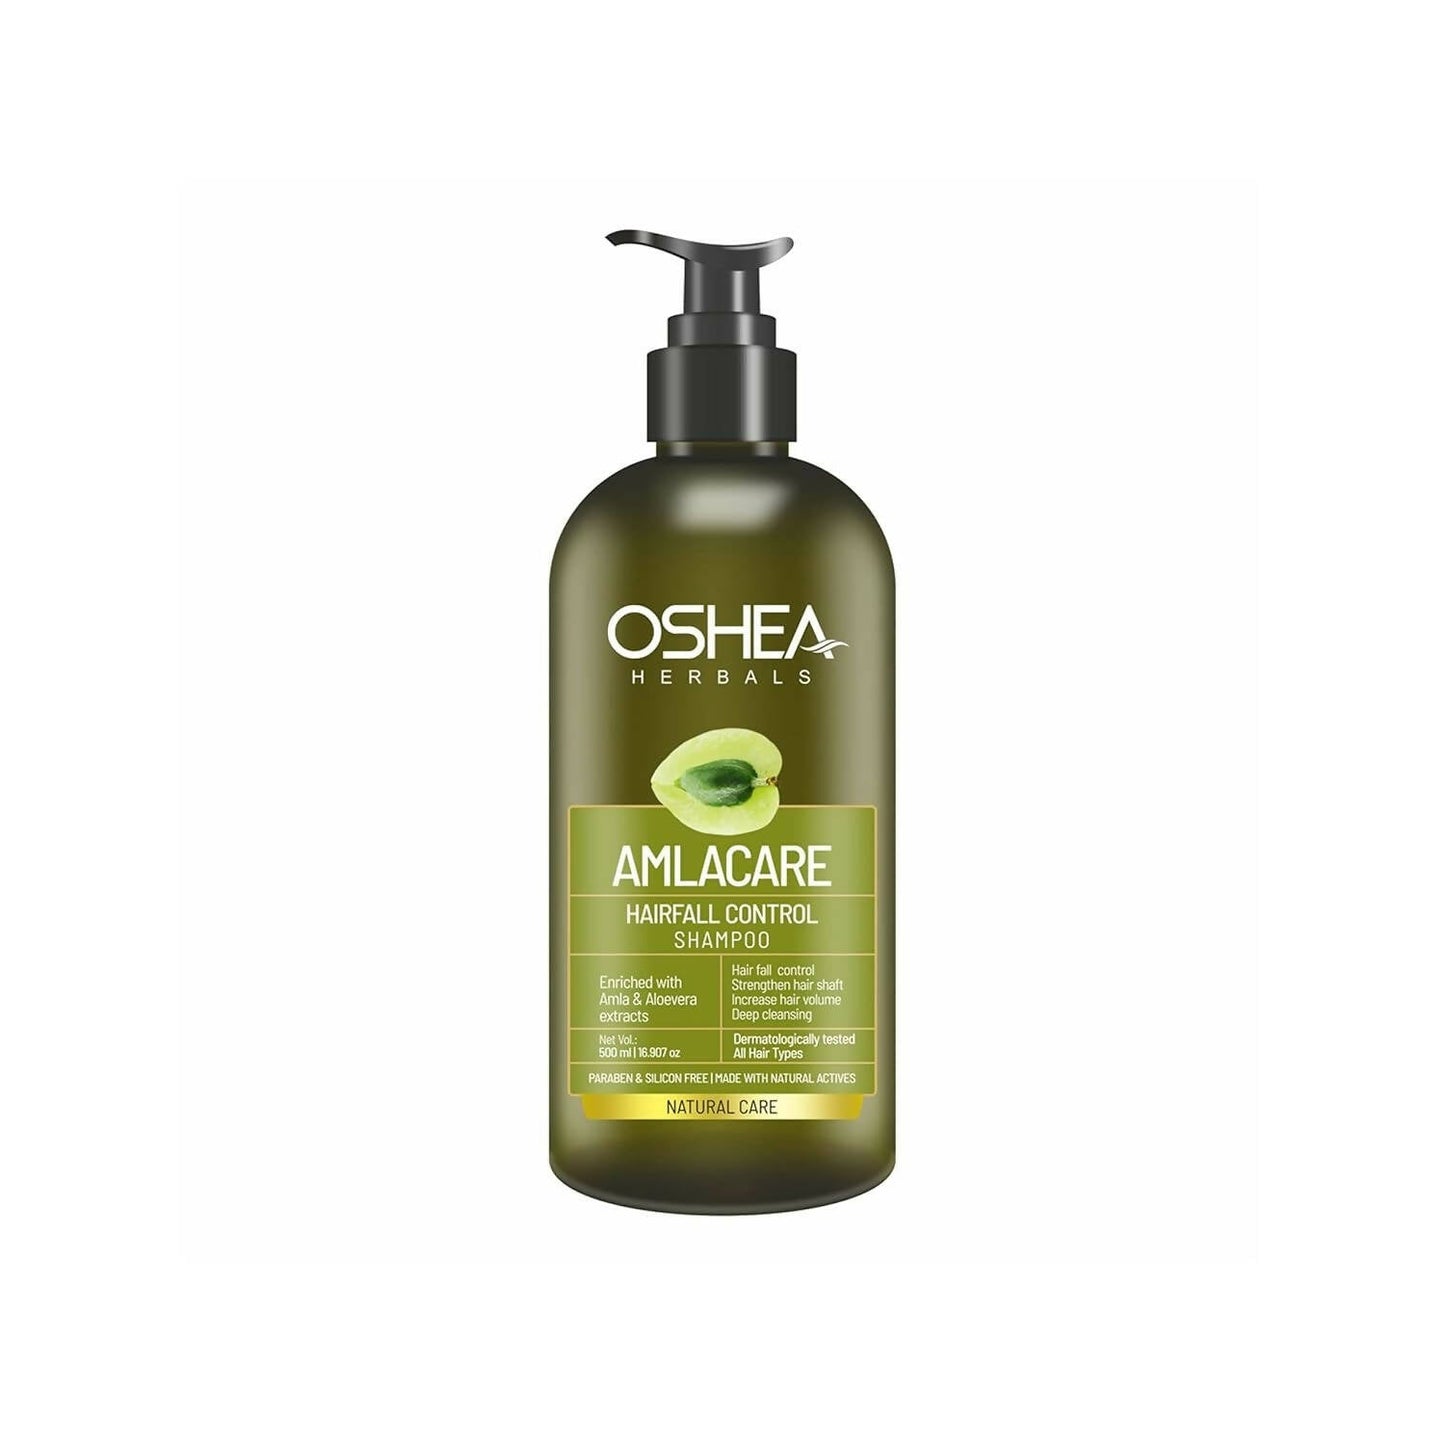 Oshea Herbals AmlaCare Hairfall Control Shampoo - buy-in-usa-australia-canada